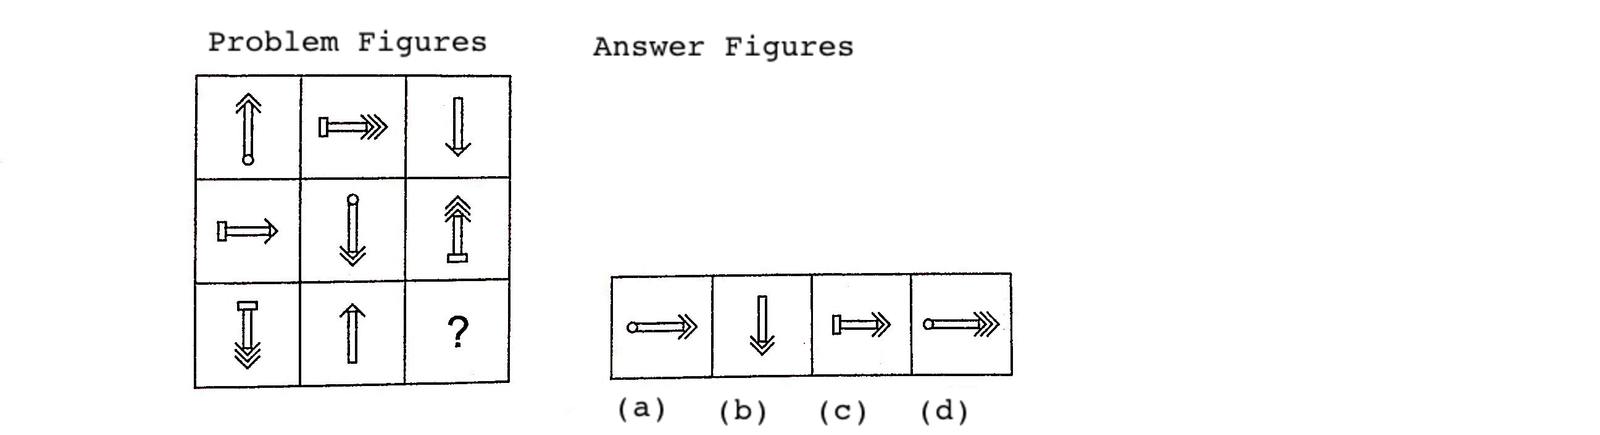 figure-matrix-non-verbal-reasoning-introduction---figure-matrix-problems